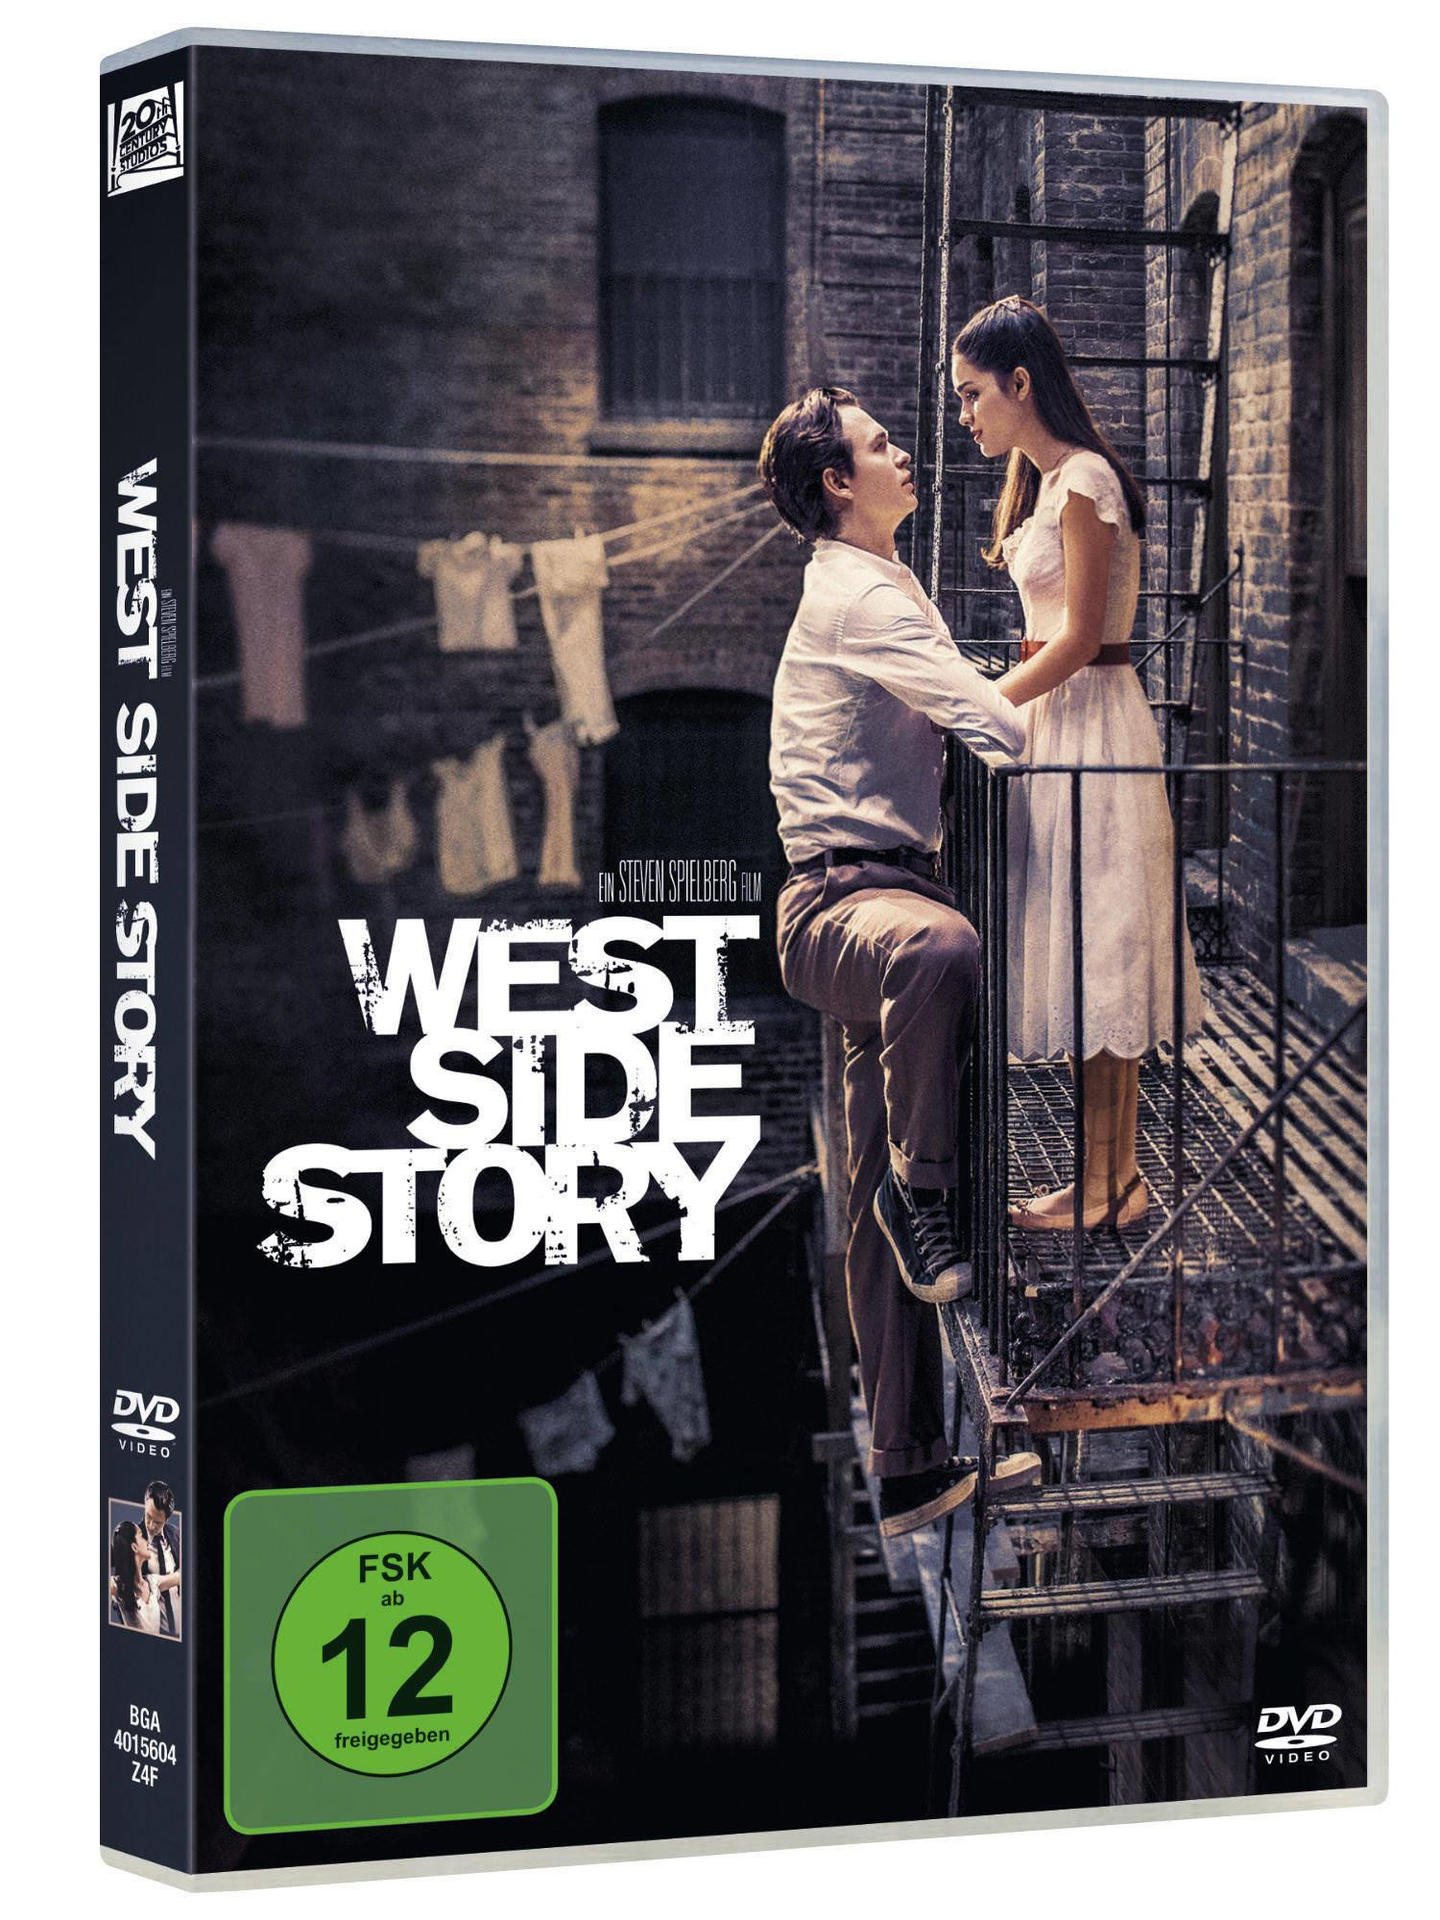 DVD Story Side West